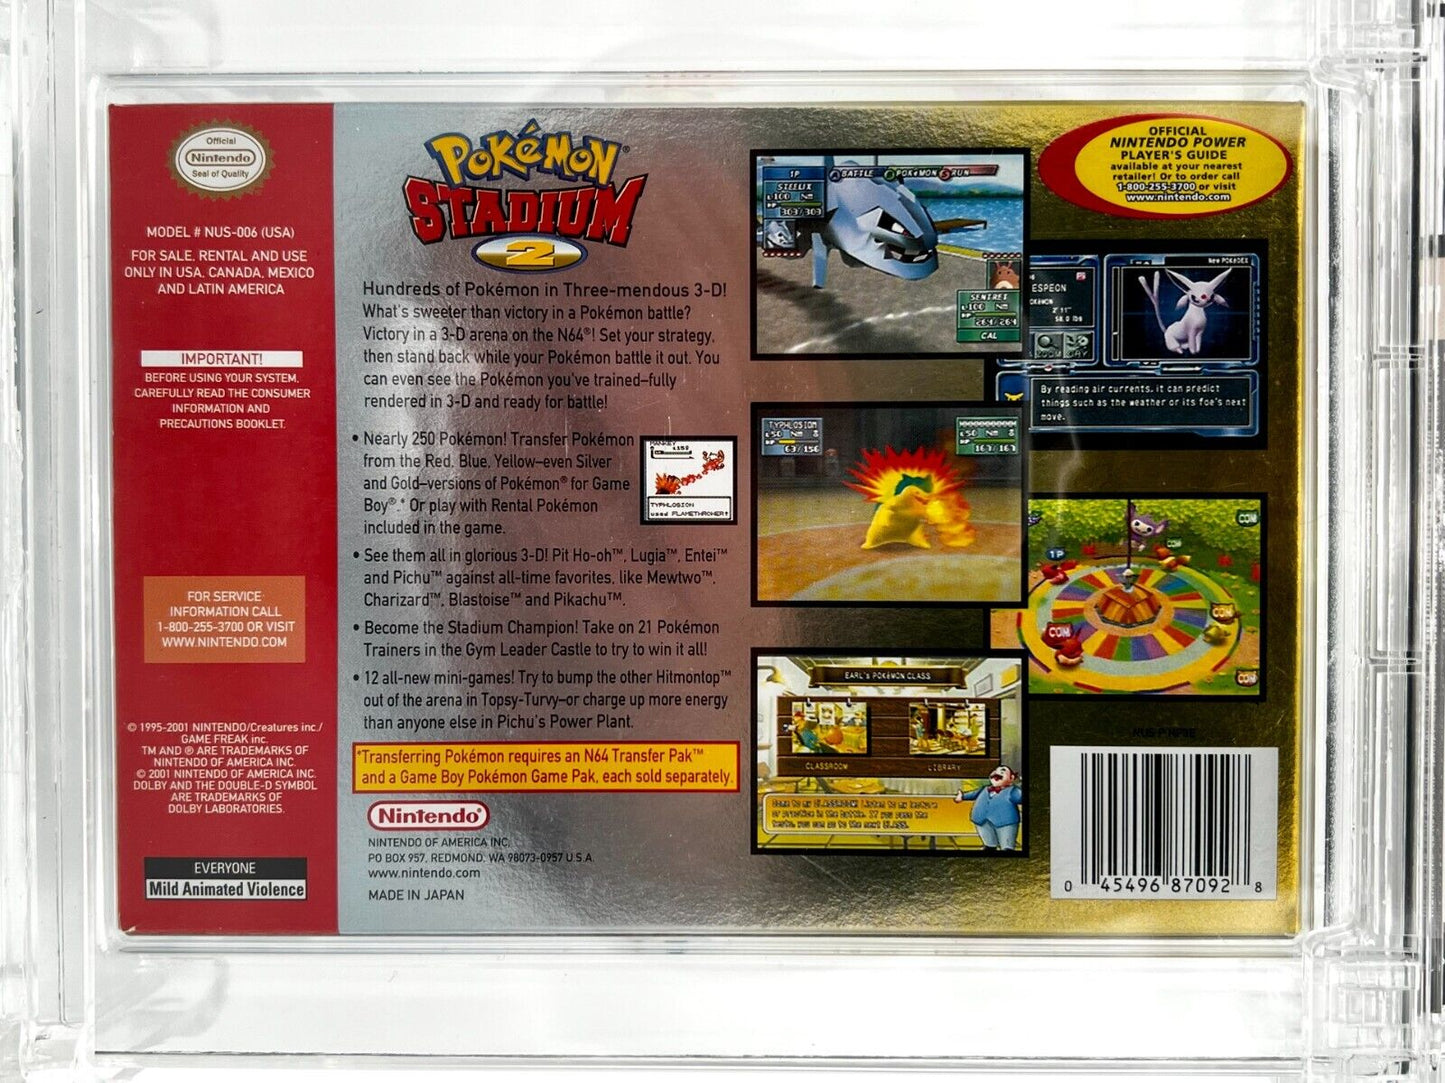 Pokemon Stadium #2 FOIL VIDEO GAME FOR N64 Nintendo 64 2000 CIB GRADED WATA 8.5